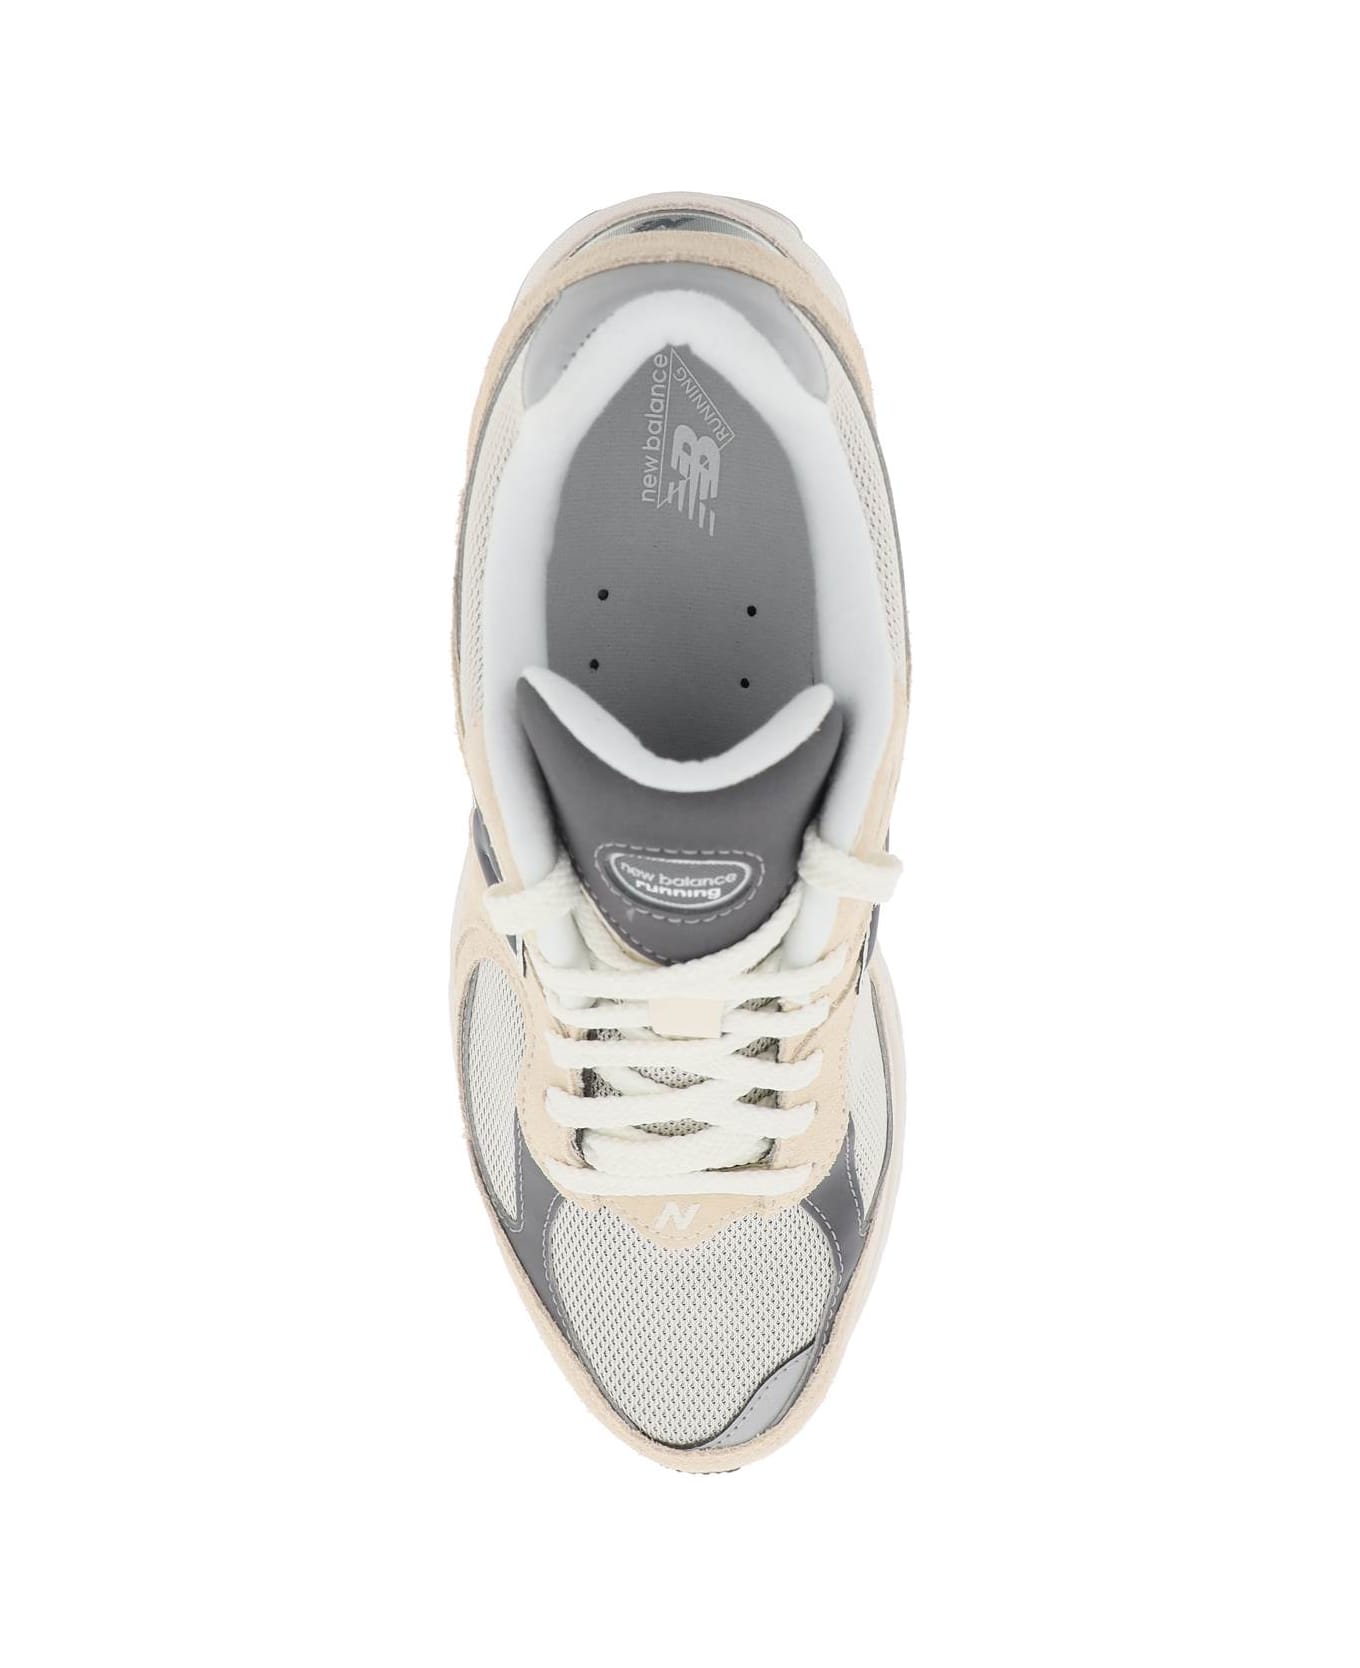 New Balance 2002r Sneakers - SANDSTONE (Grey)